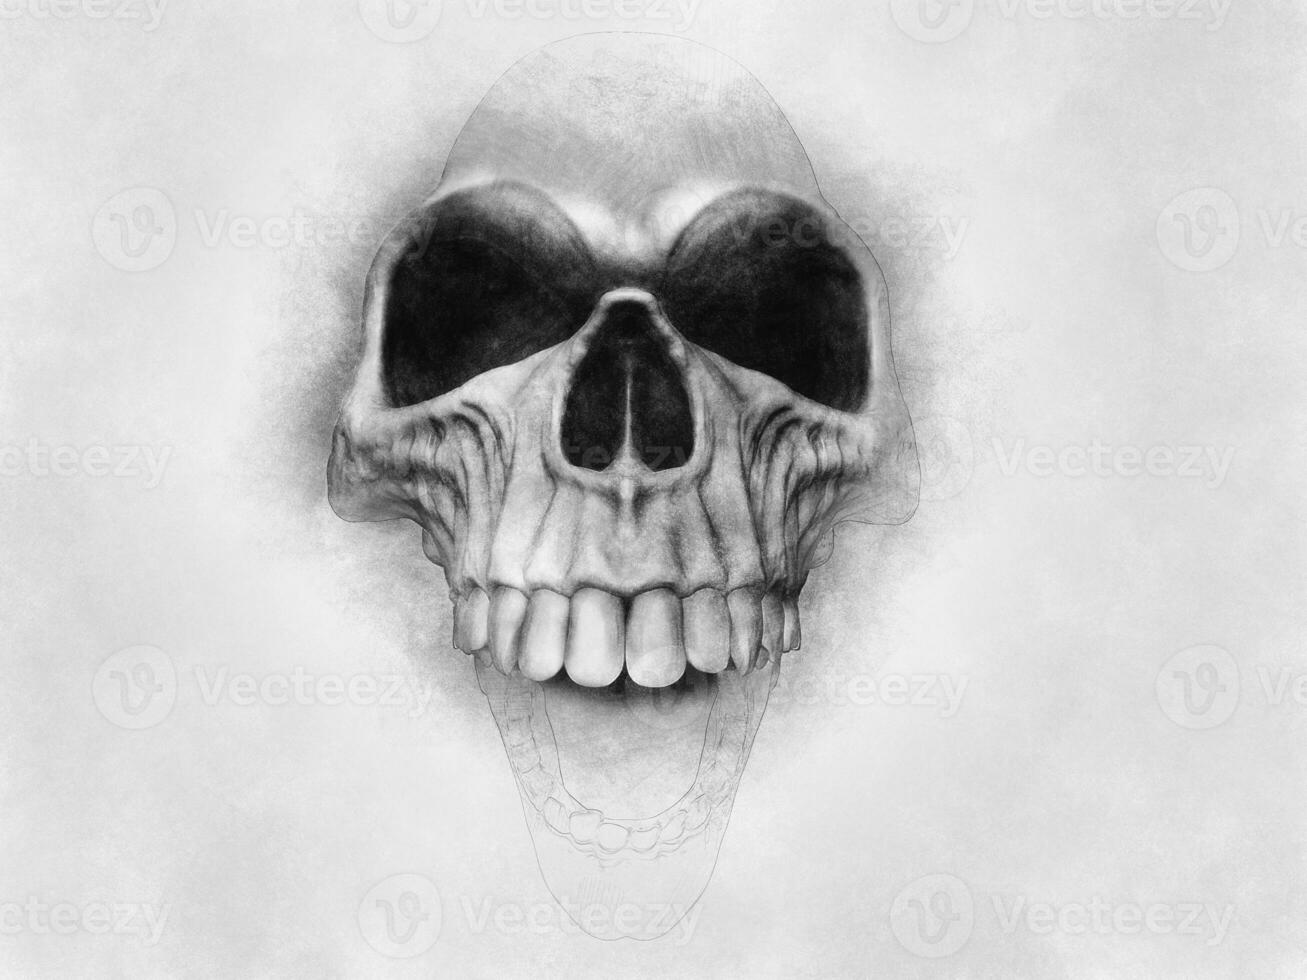 Crazy teeth skull drawing photo